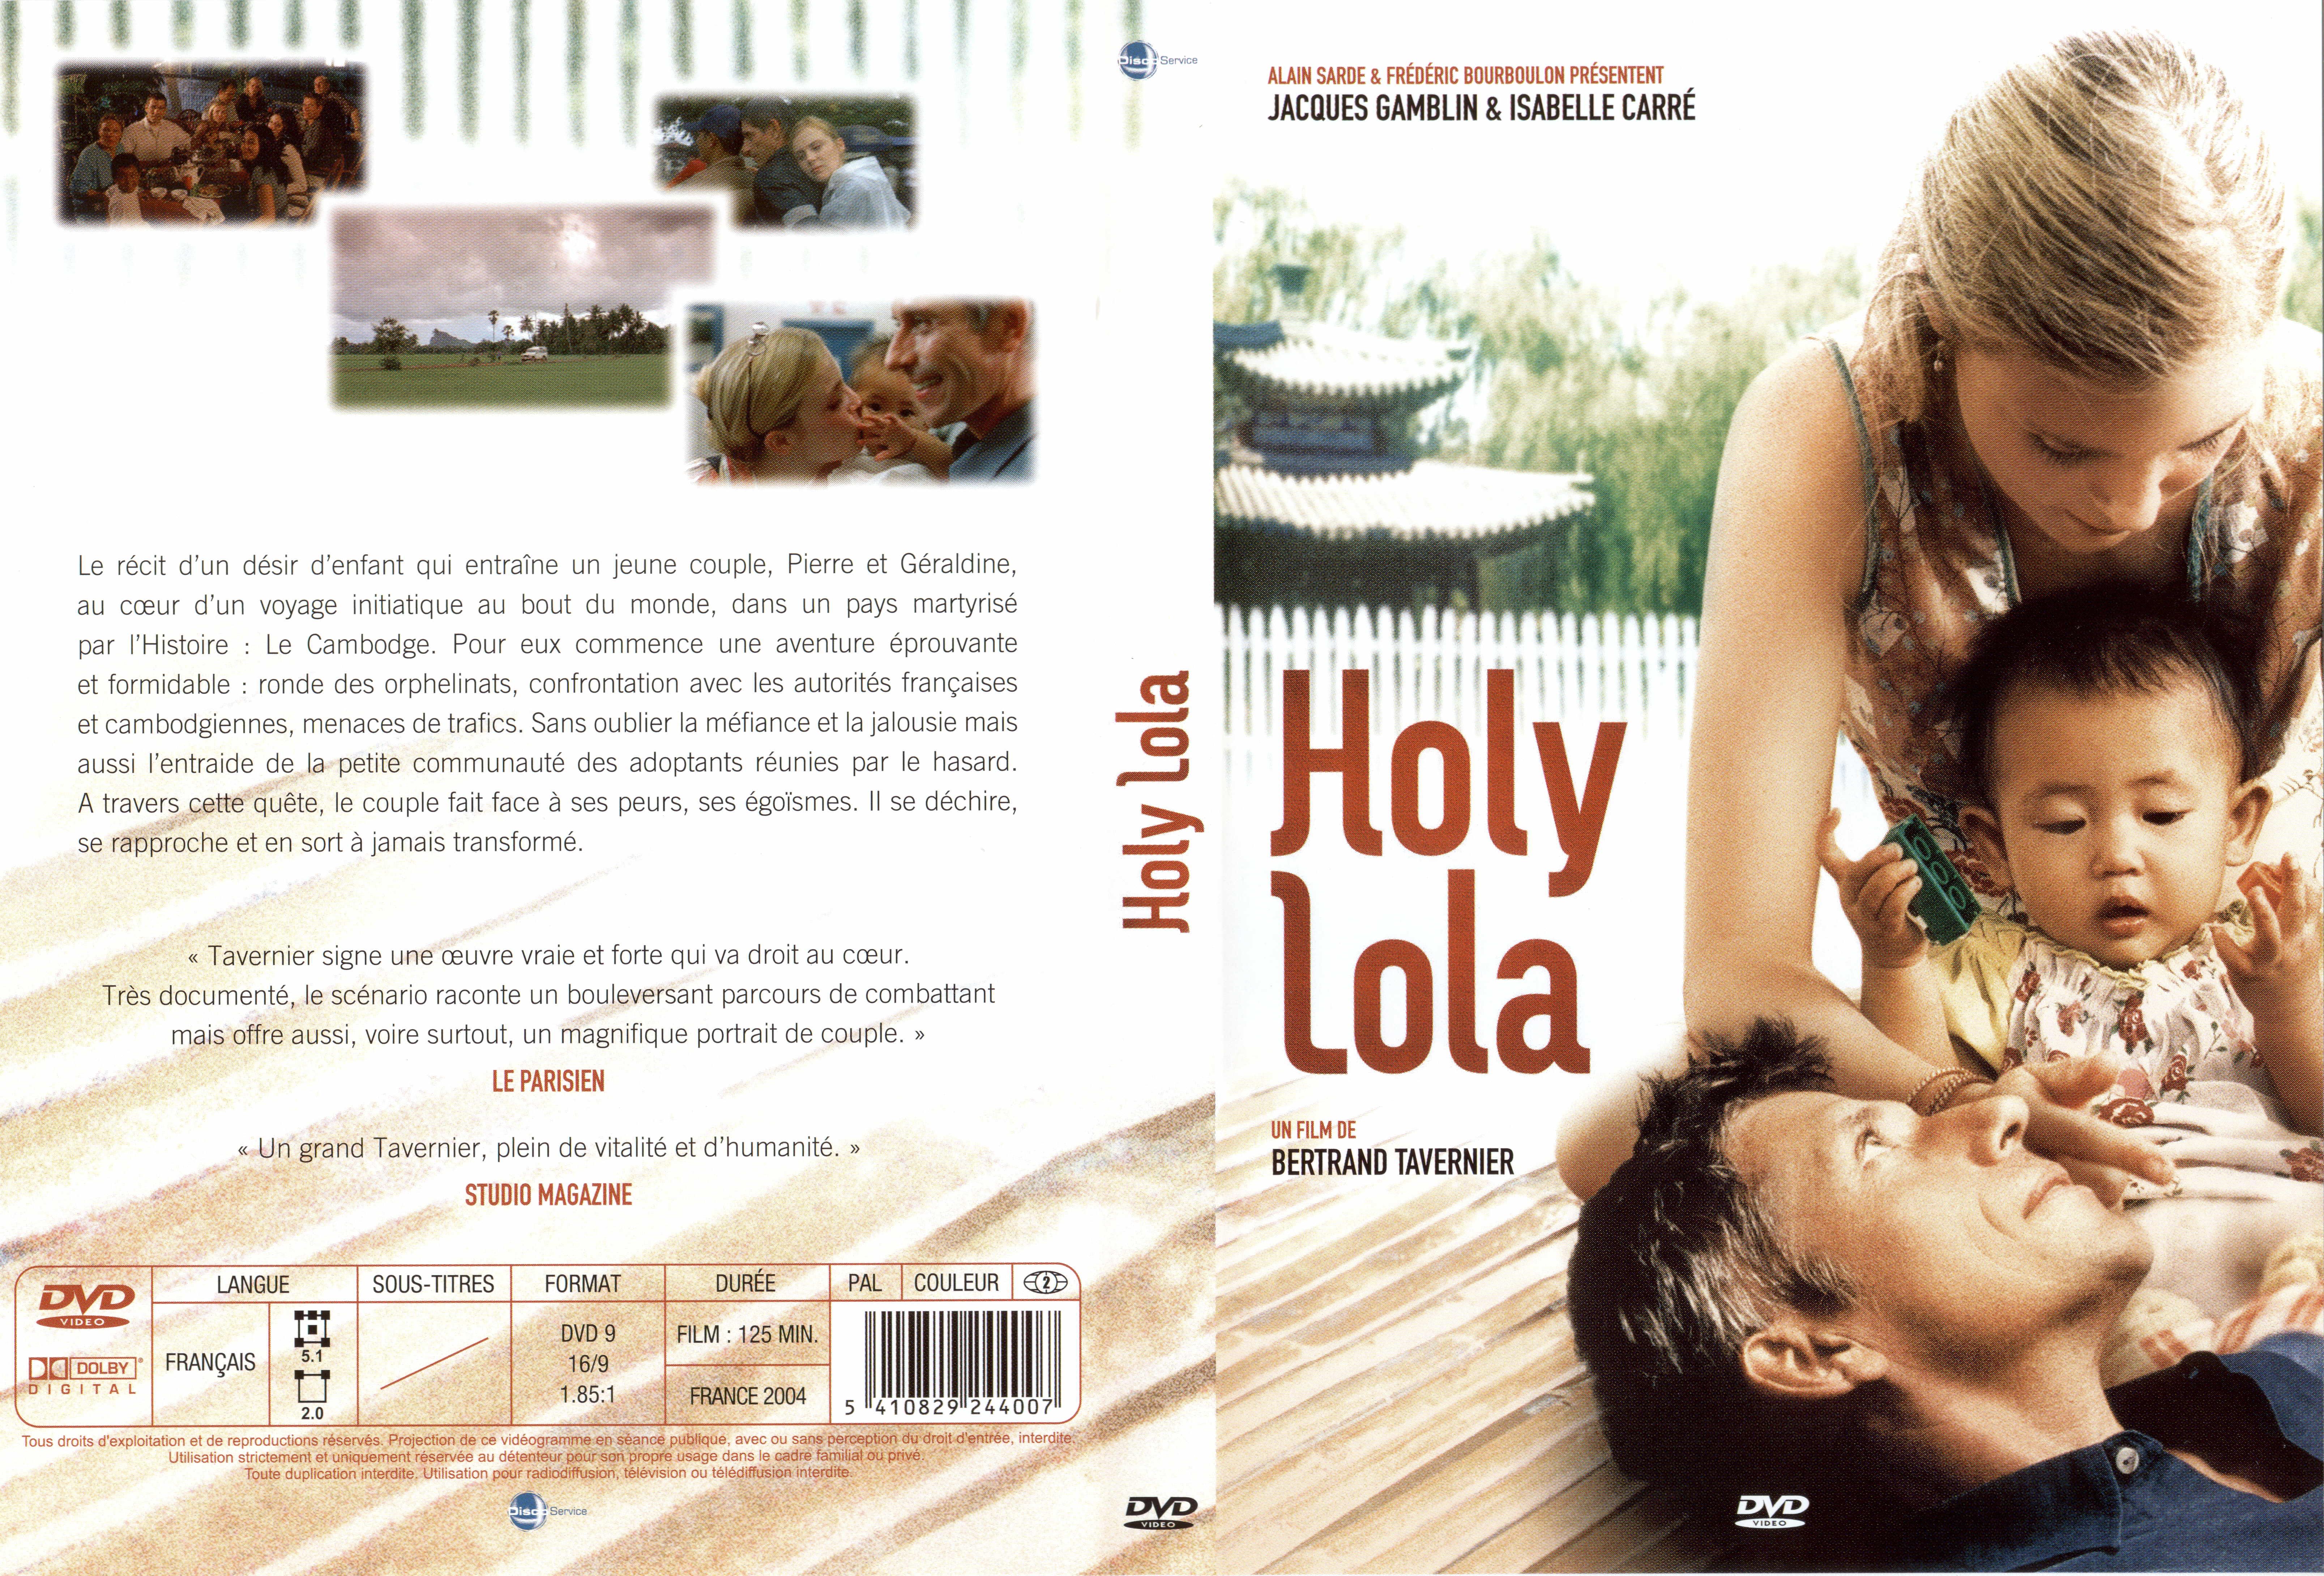 Jaquette DVD Holy Lola v2